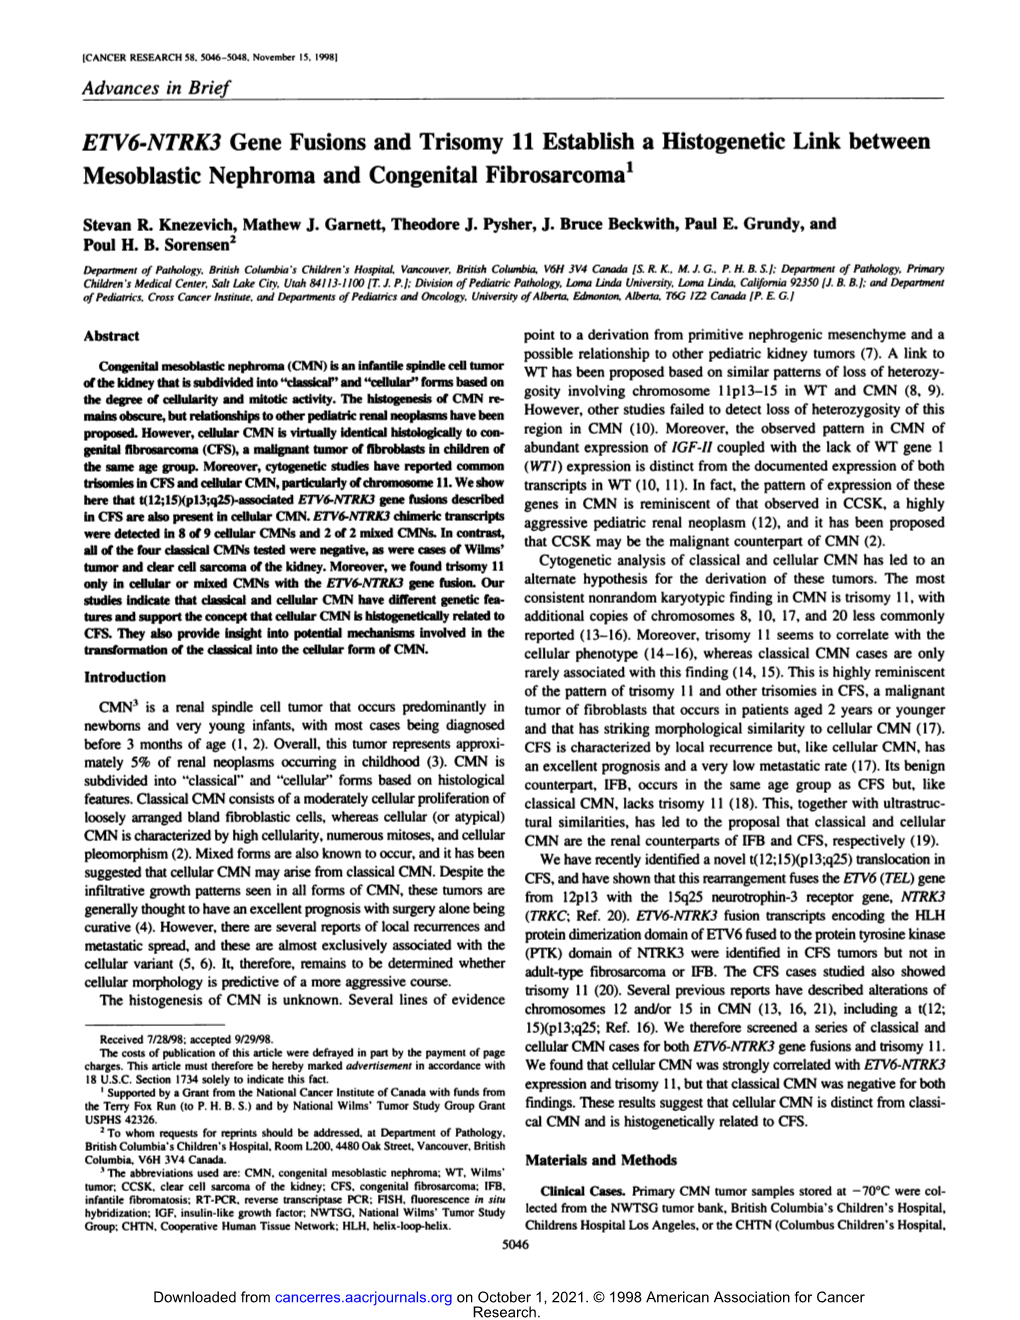 ETV6-NTRK3 Gene Fusions and Trisomy 11 Establish a Histogenetic Link Between Mesoblastic Nephroma and Congenital Fibrosarcoma1